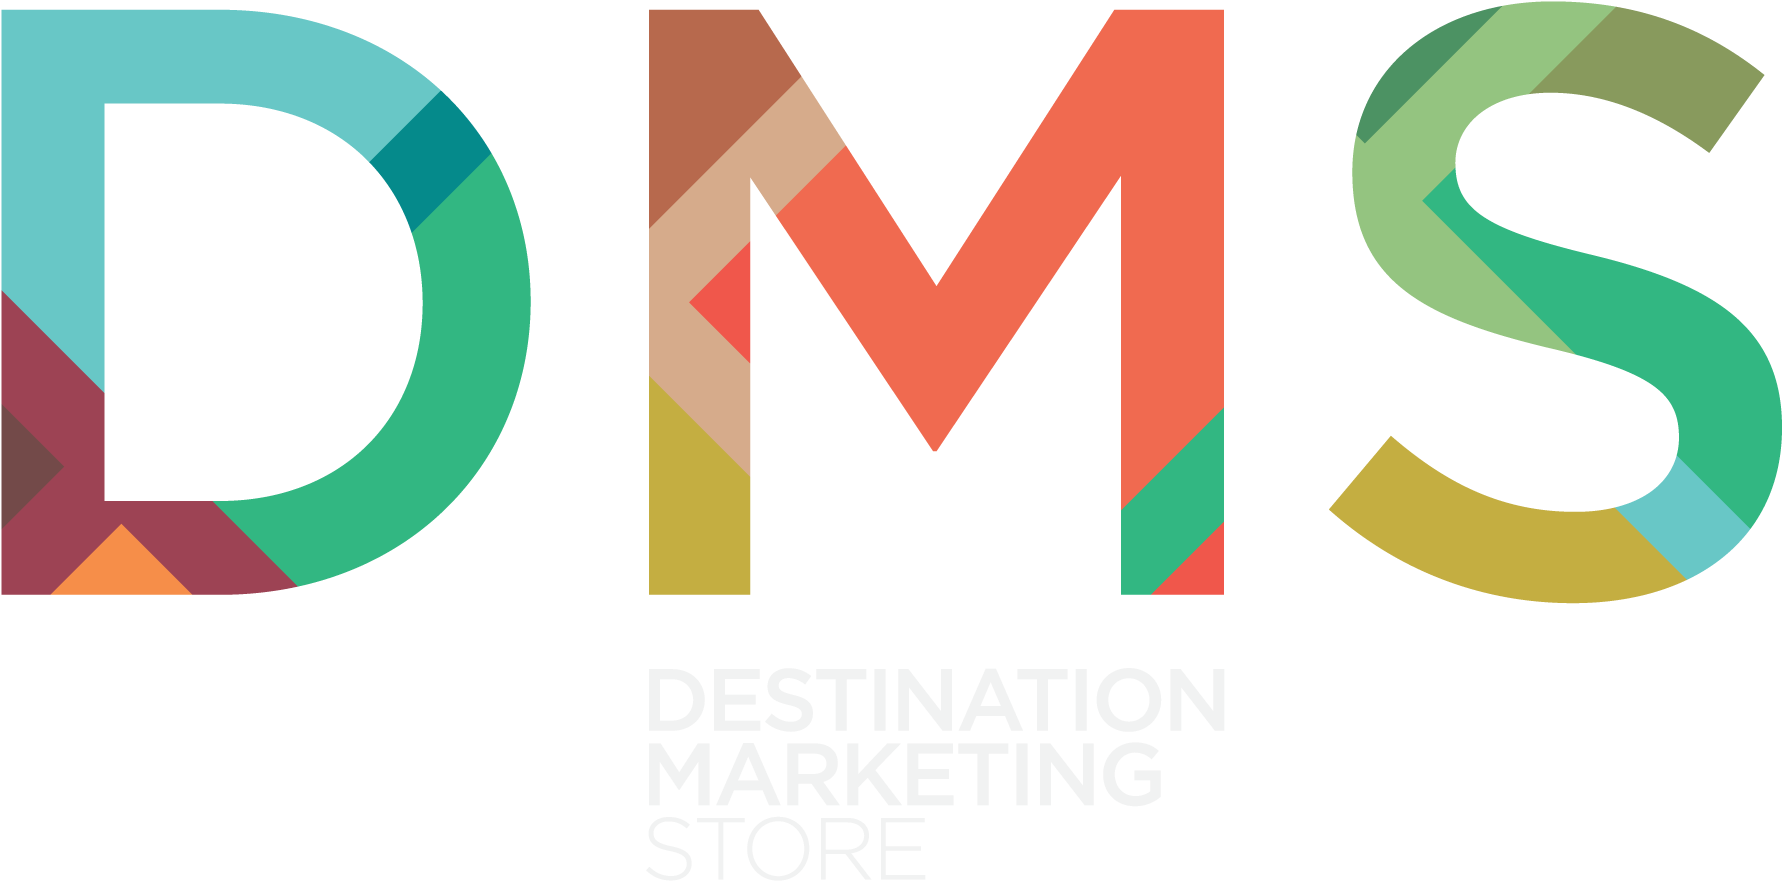 Destination Marketing Store - Destination Marketing Store (1822x893)